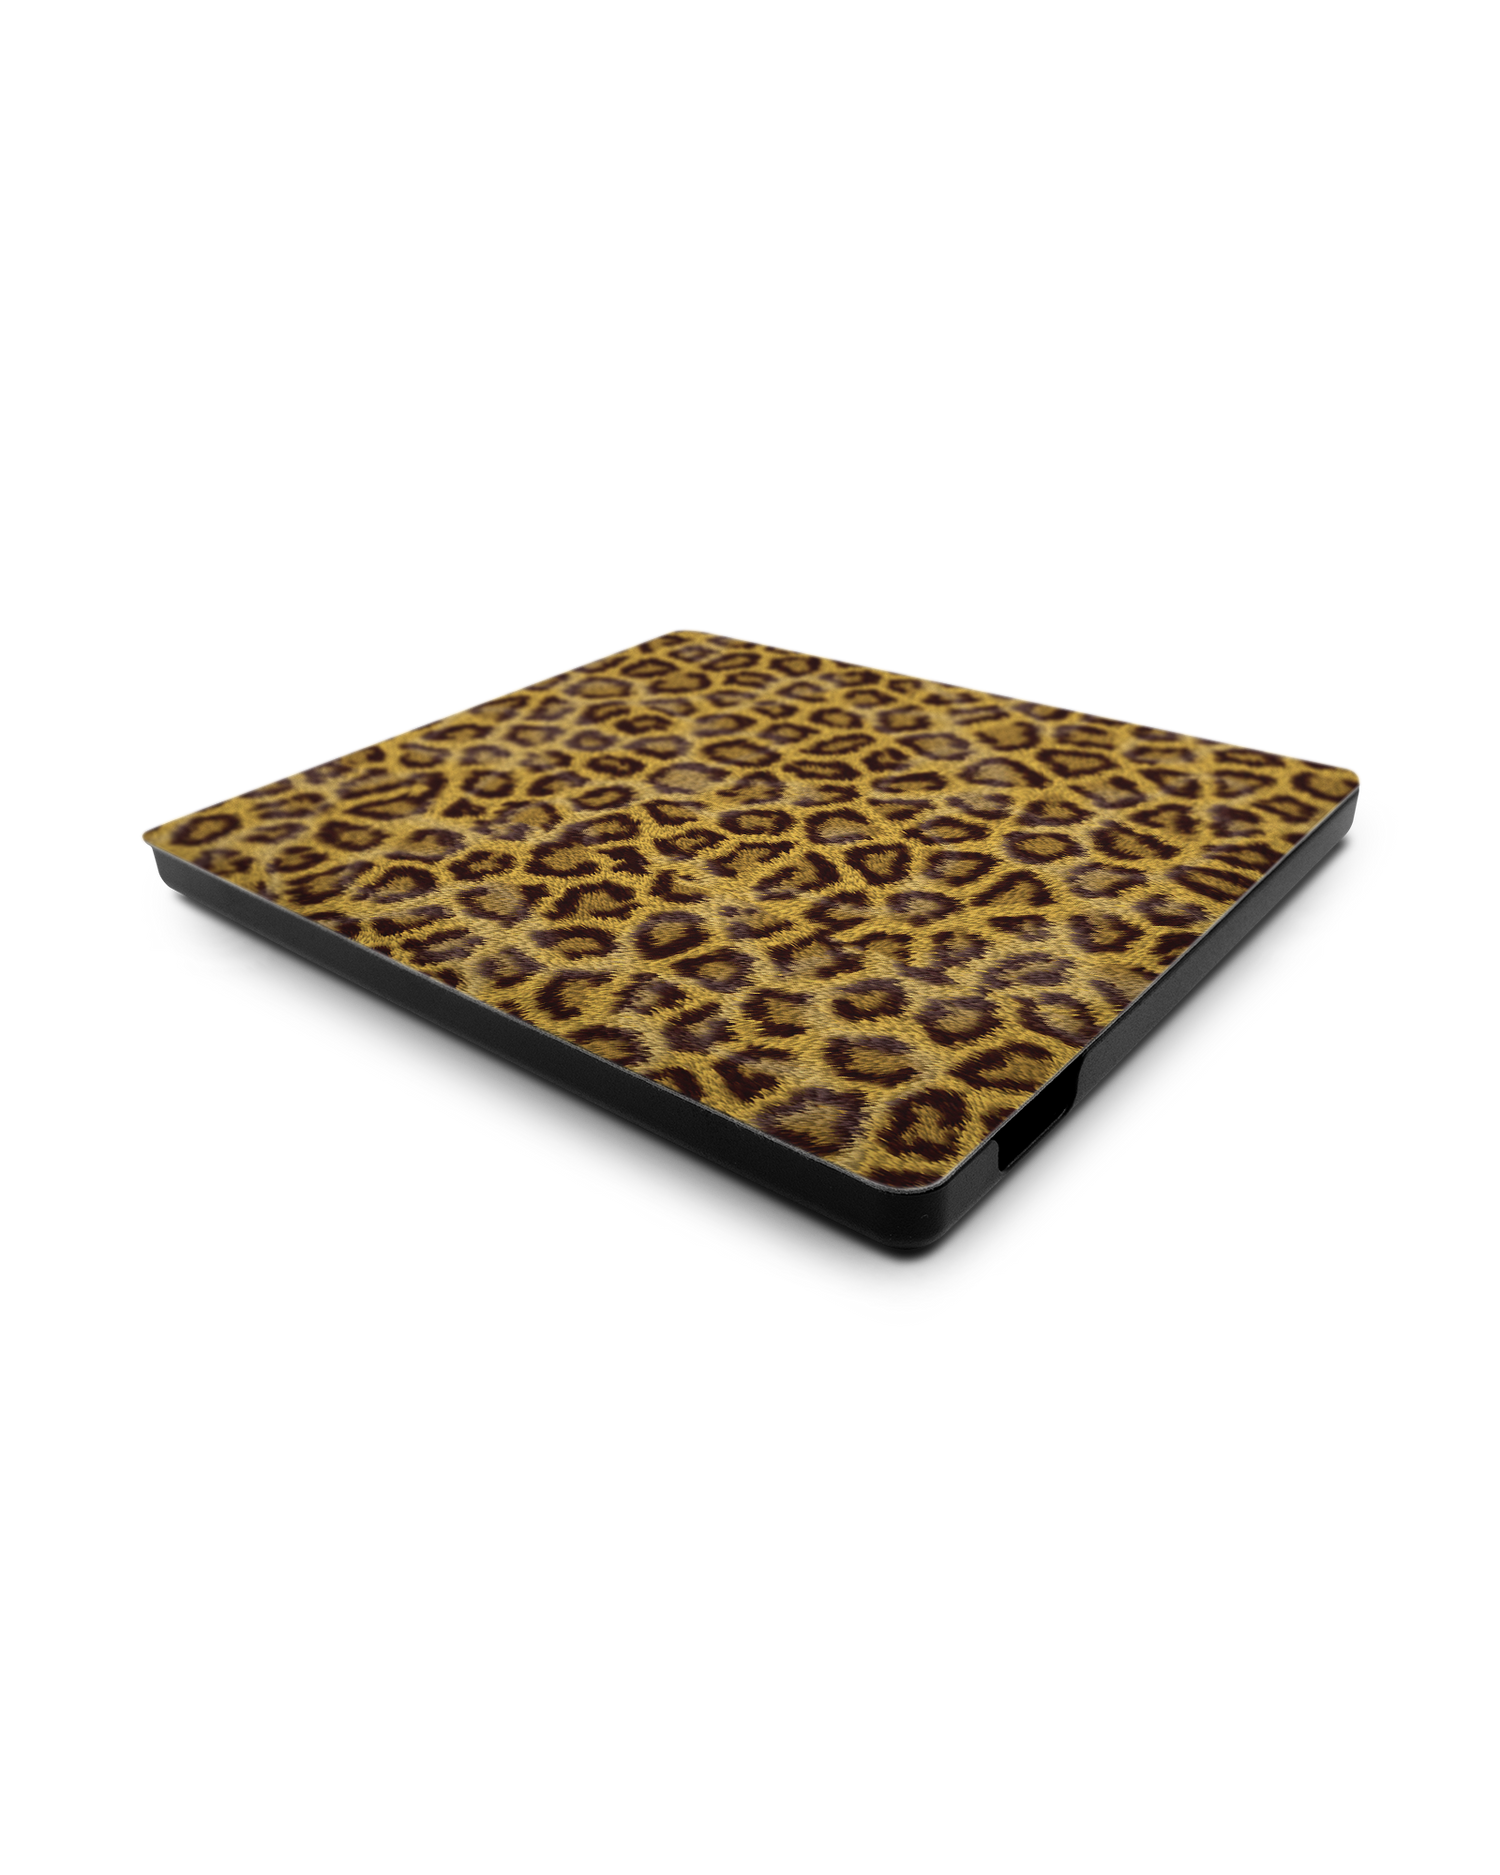 Leopard Skin eReader Smart Case for Amazon Kindle Oasis: Lying down